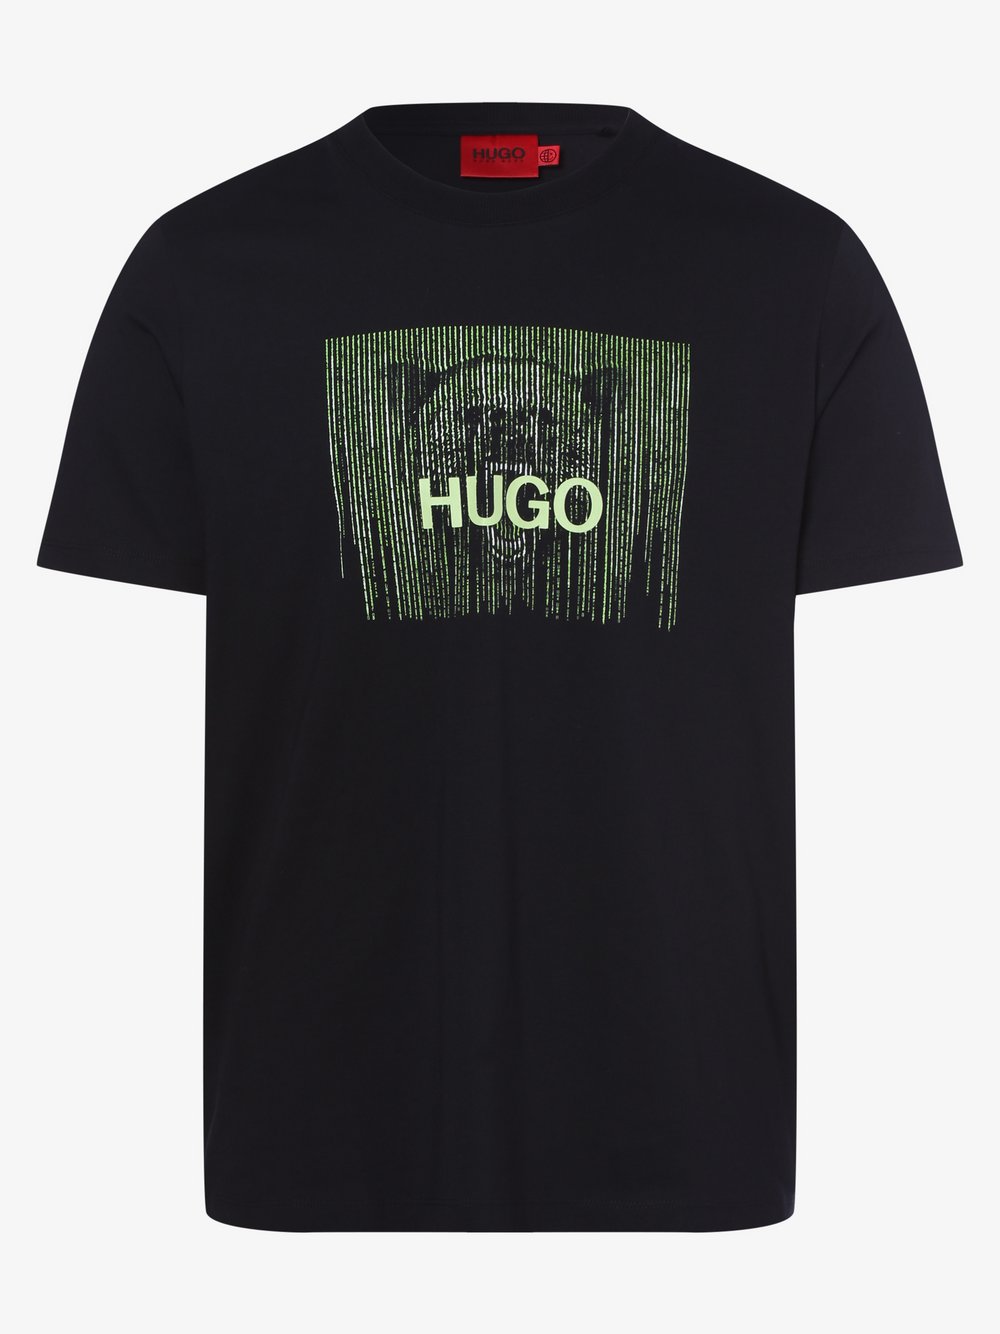 HUGO - T-shirt męski – Dintage, czarny